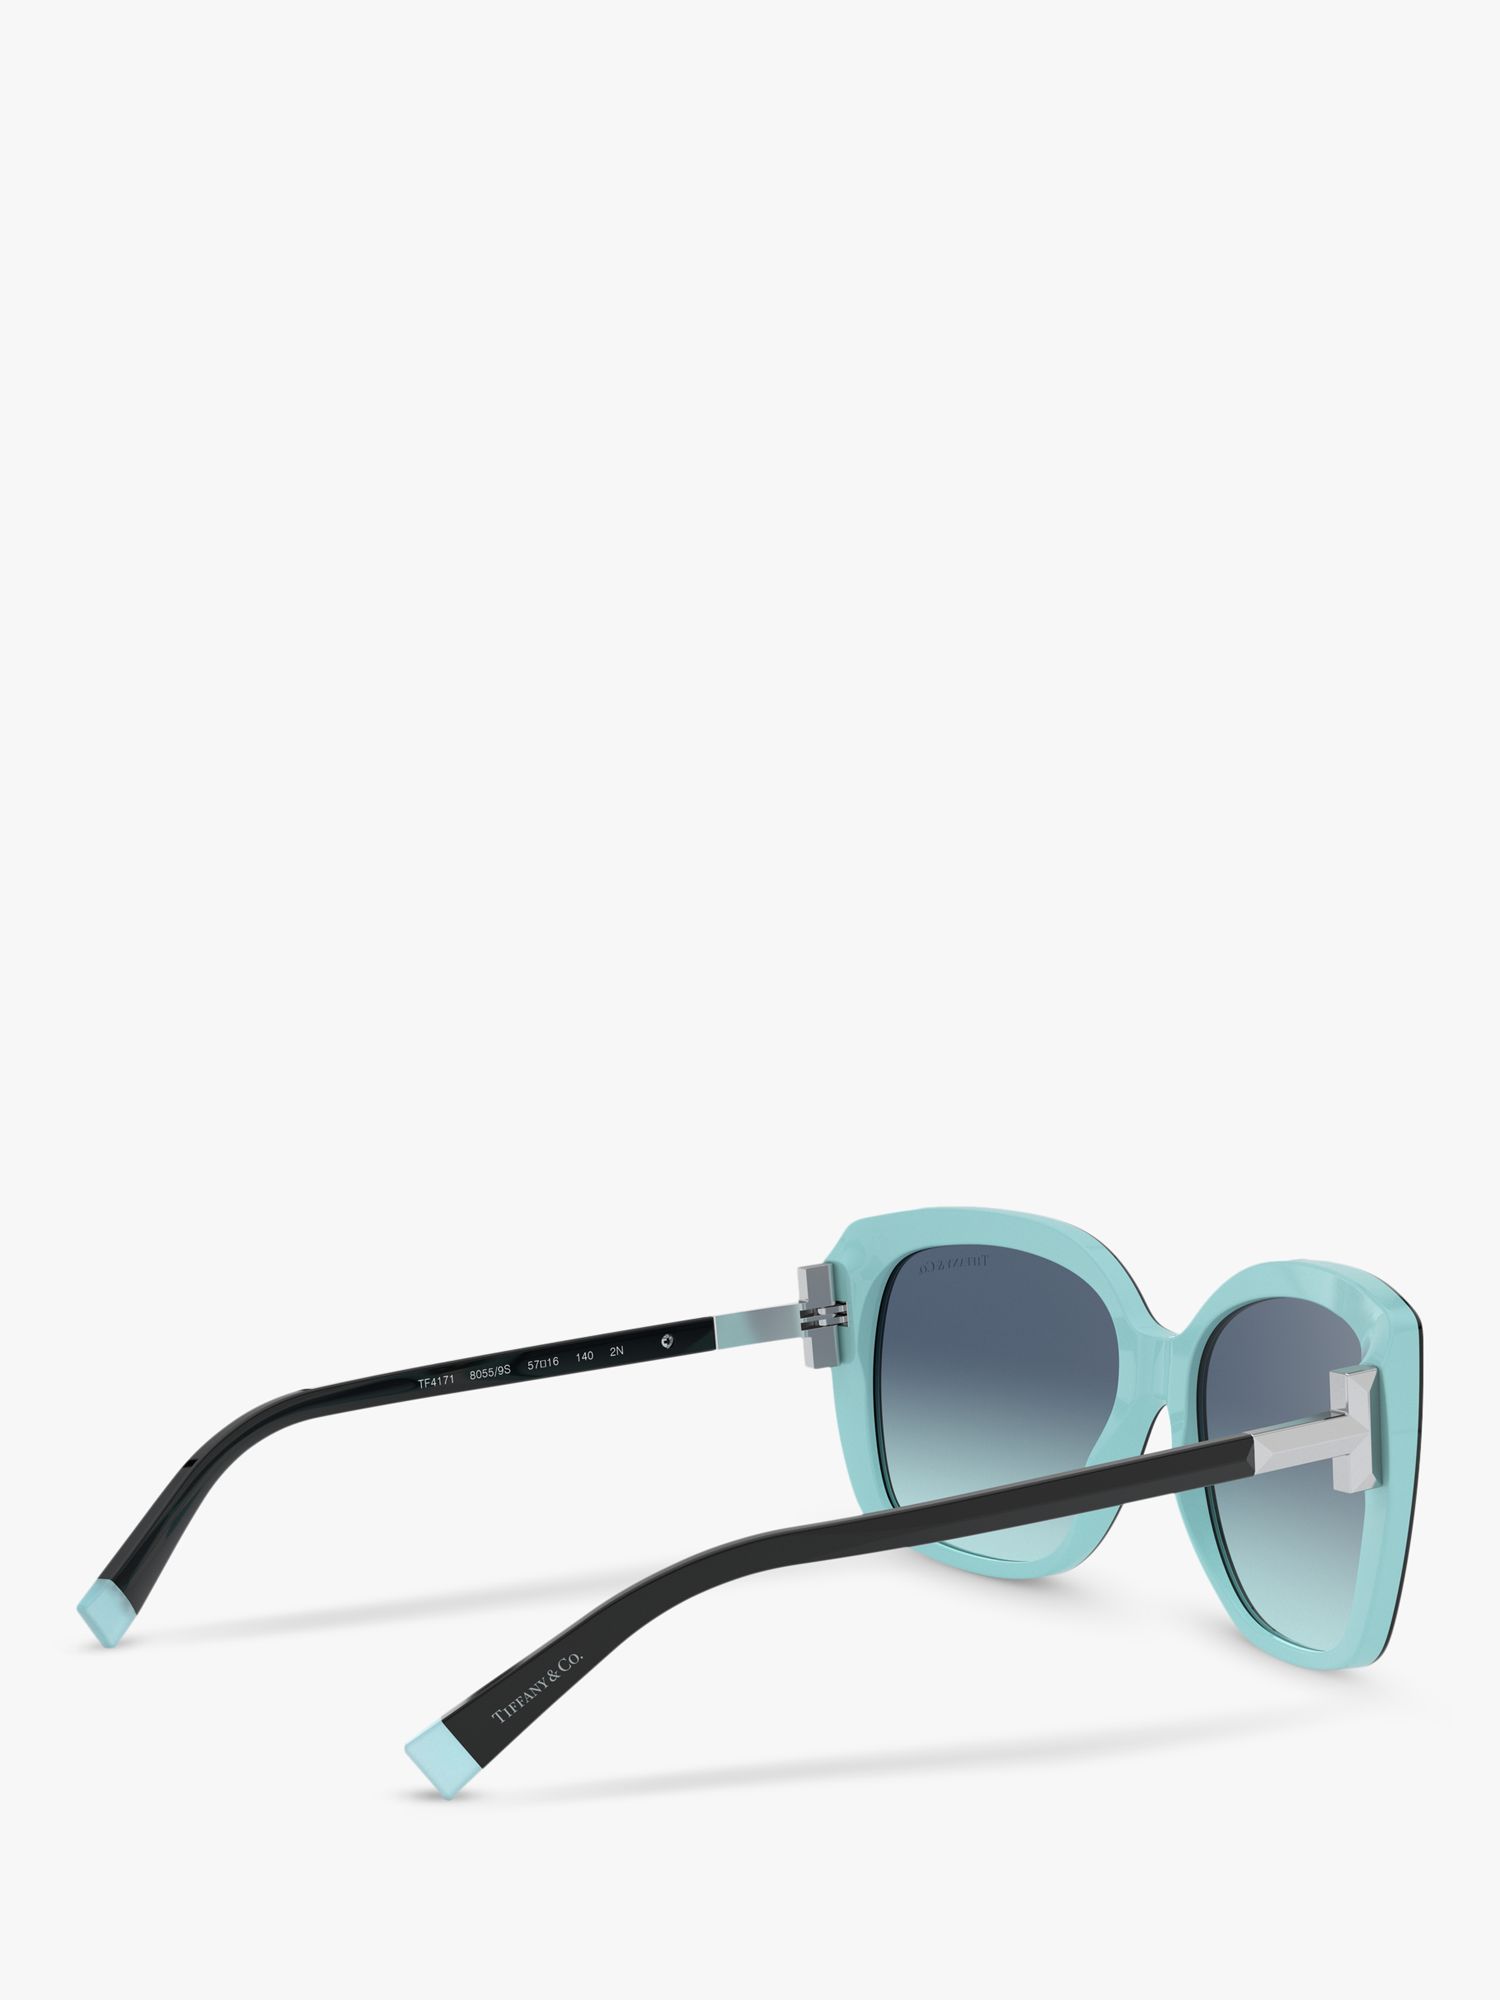 Tiffany & Co TF4171 Women's Square Sunglasses, Aqua Blue